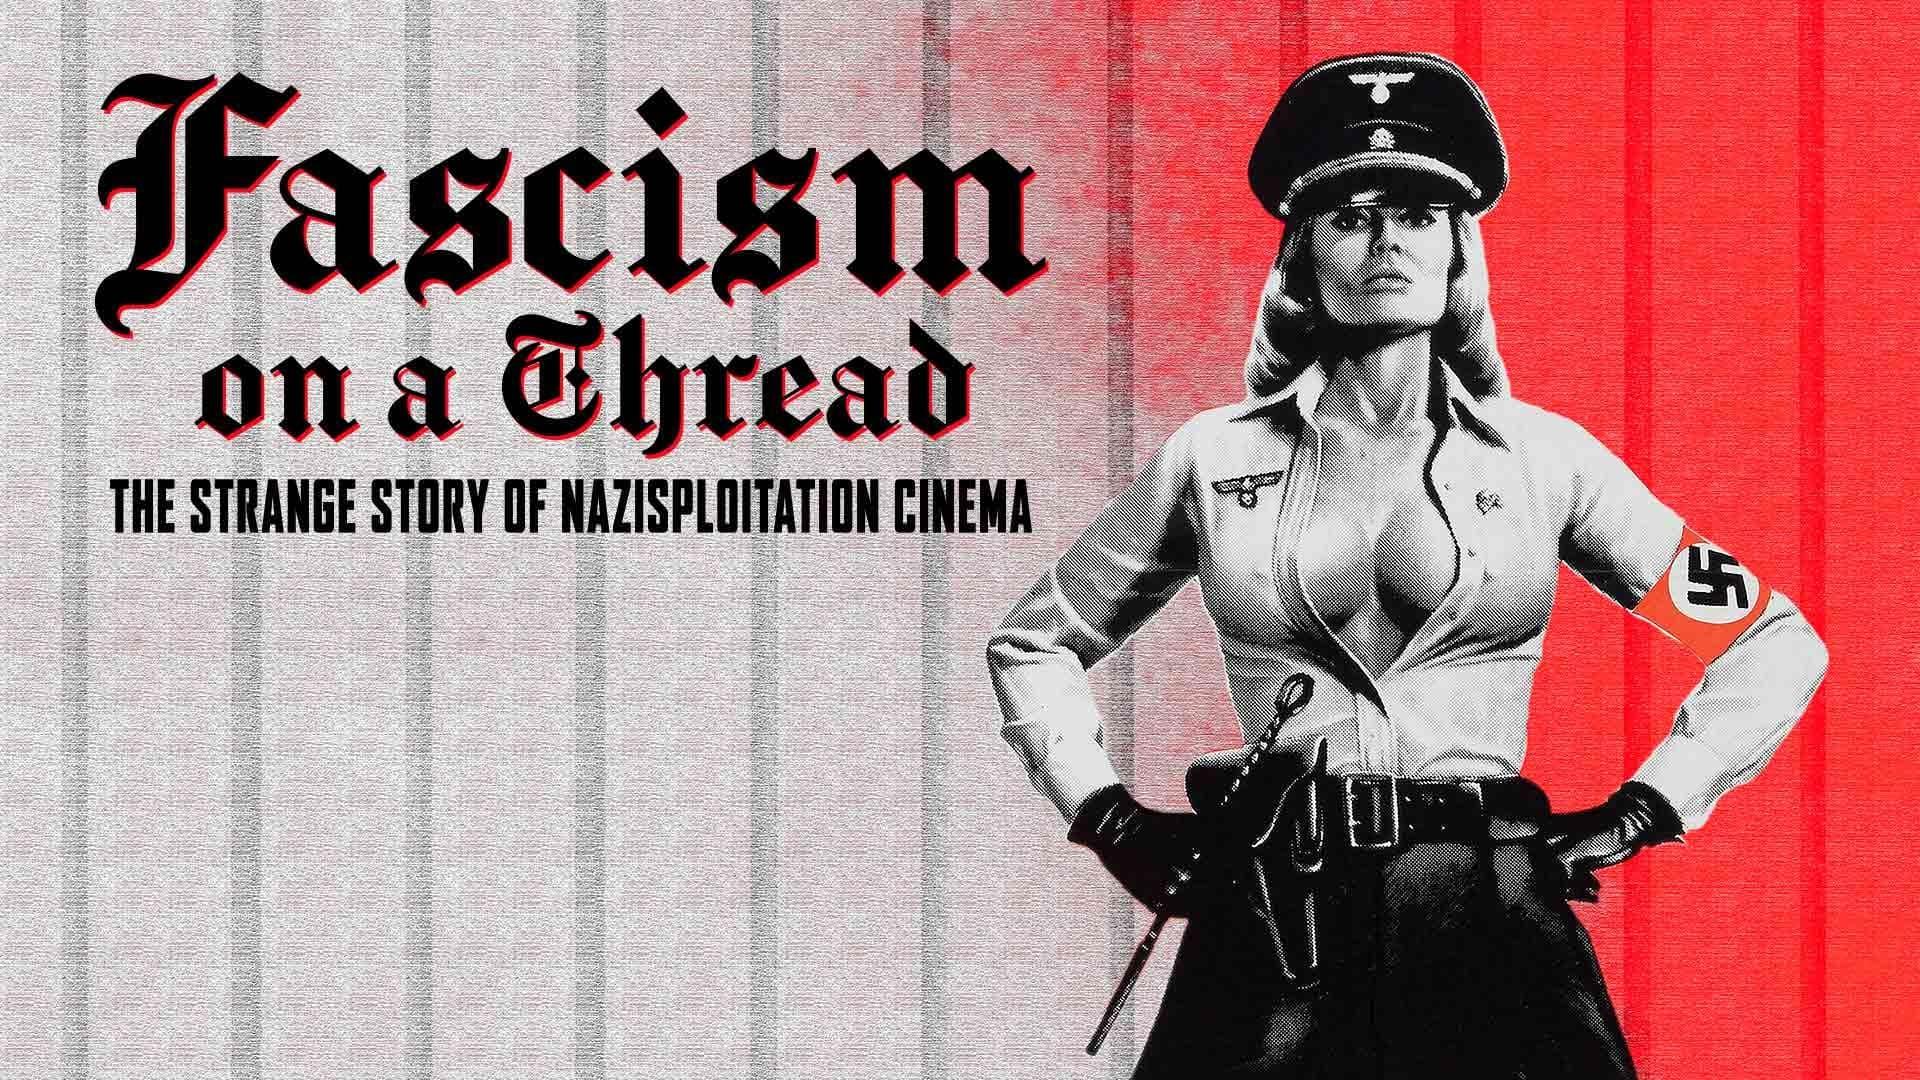 Fascism on a Thread: The Strange Story of Nazisploitation Cinema backdrop